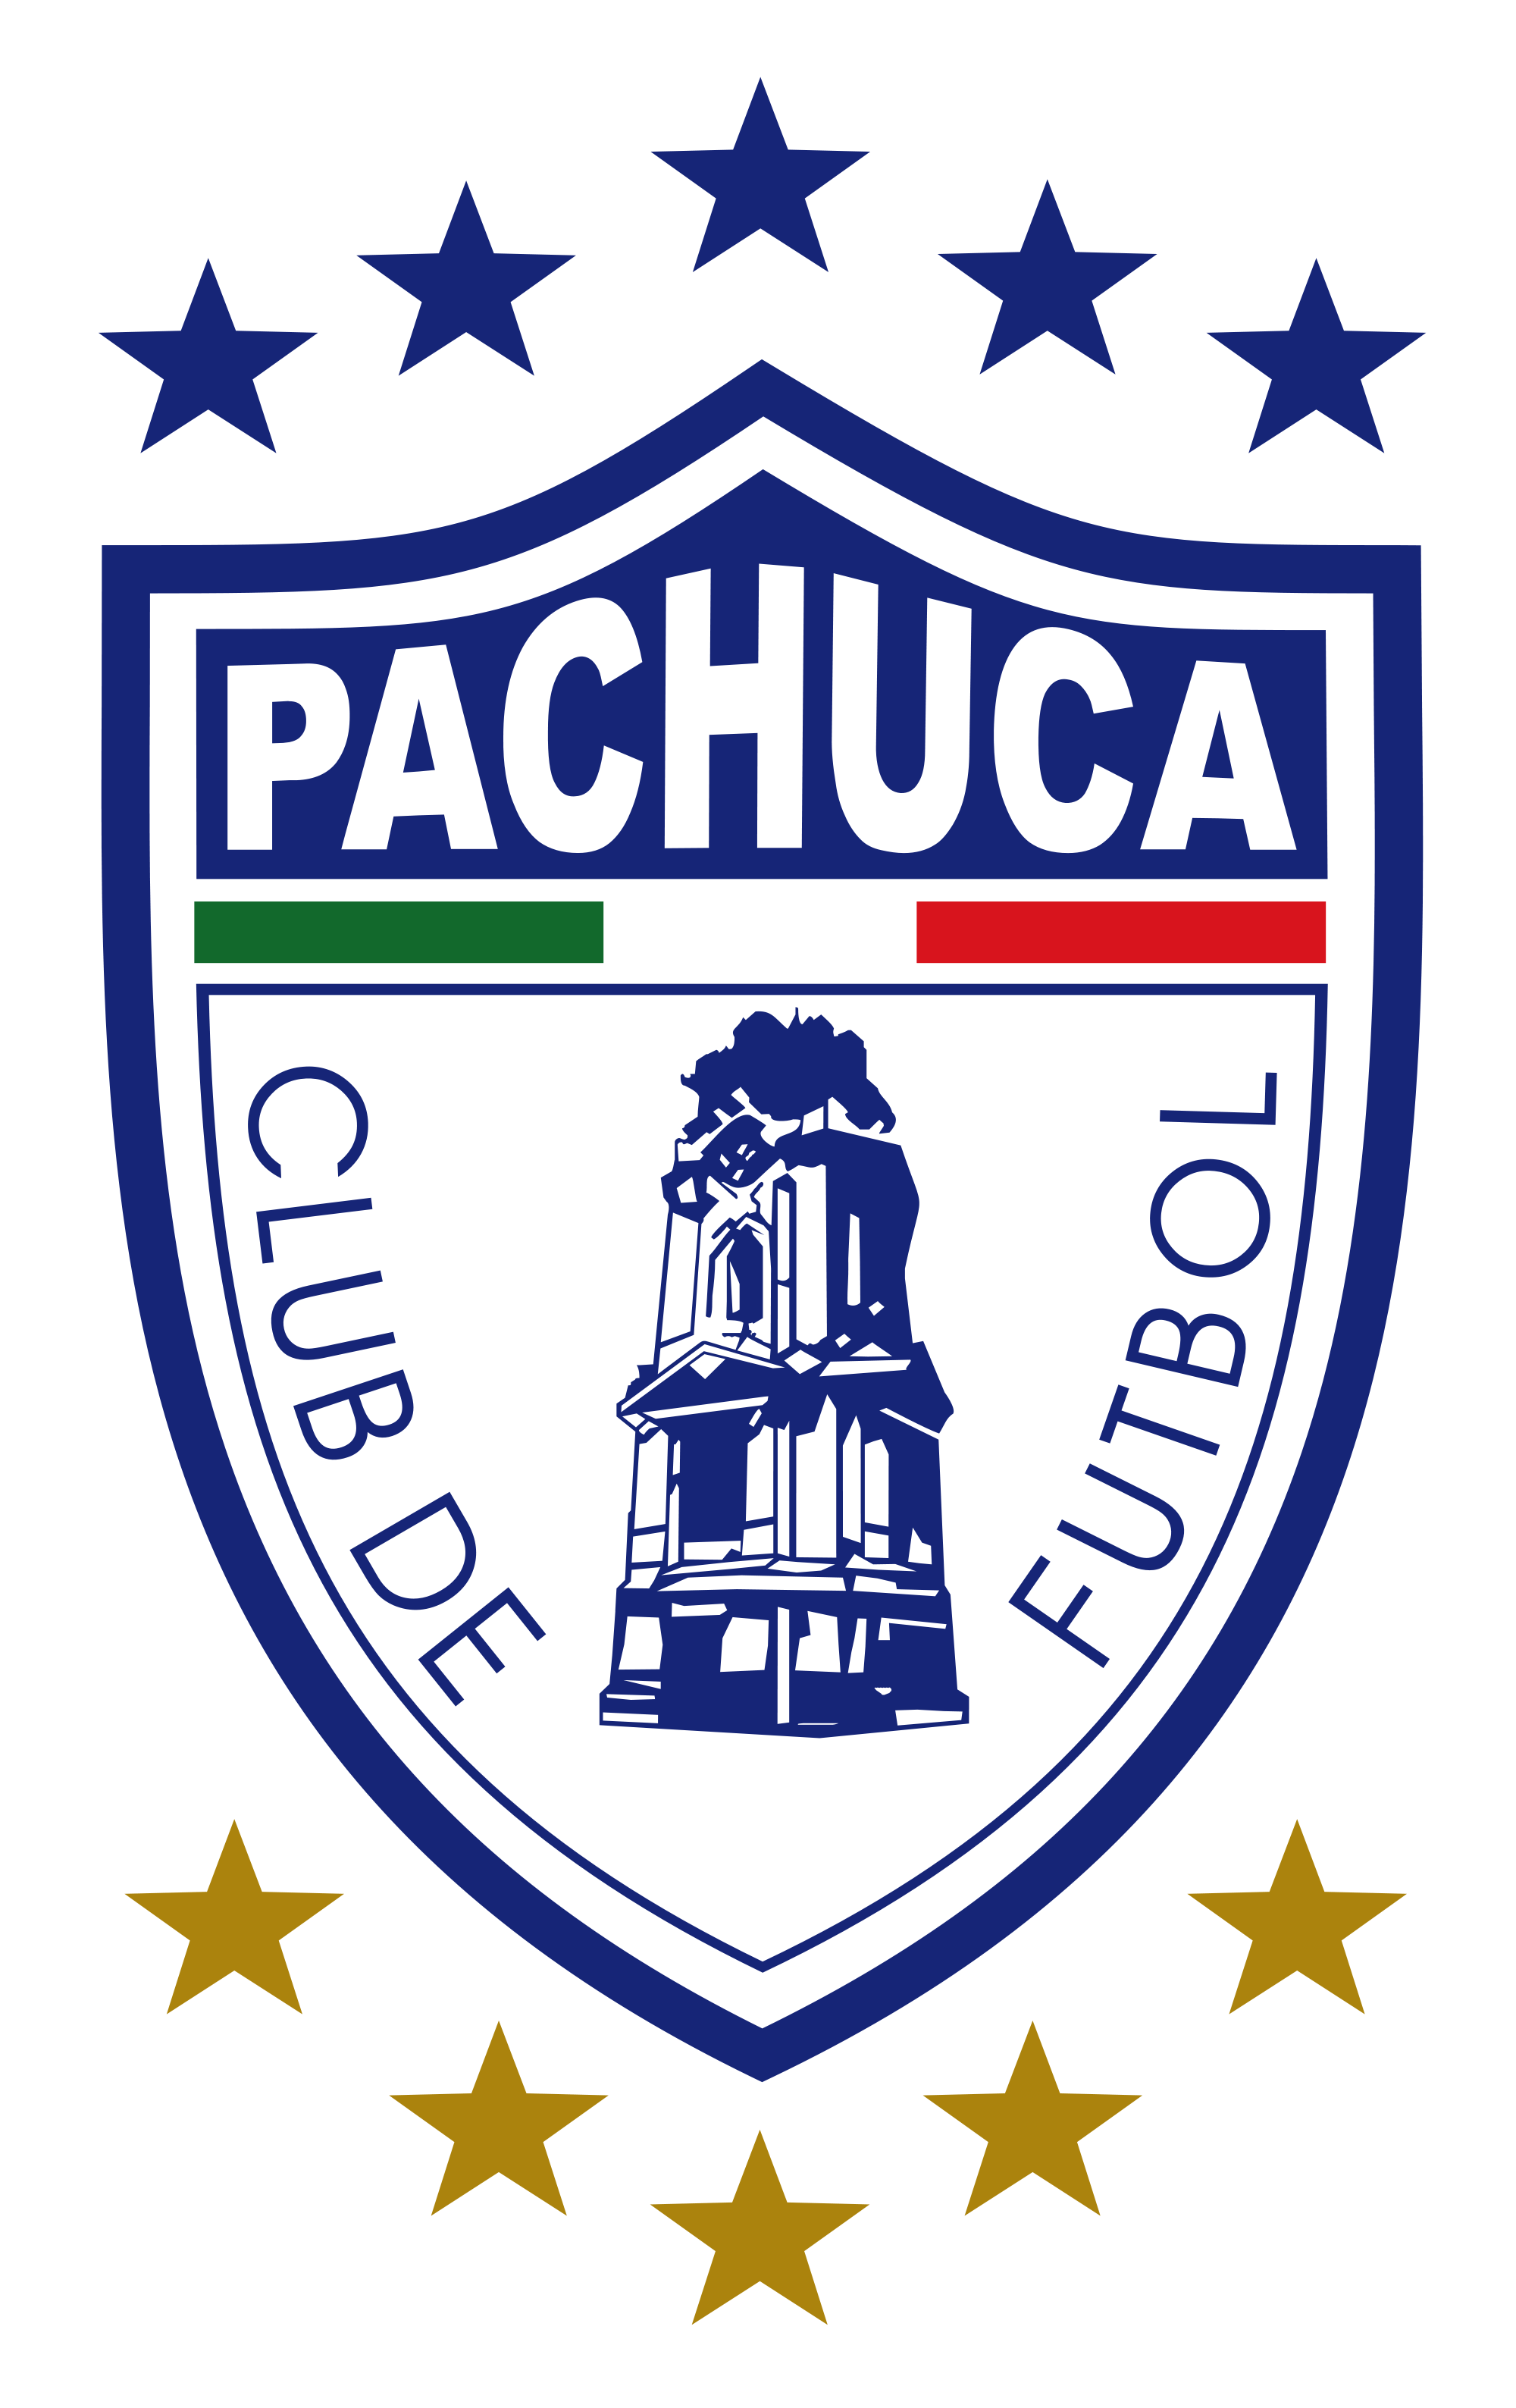 C.F. Pachuca (Liga MX). Soccer Badges. Football team